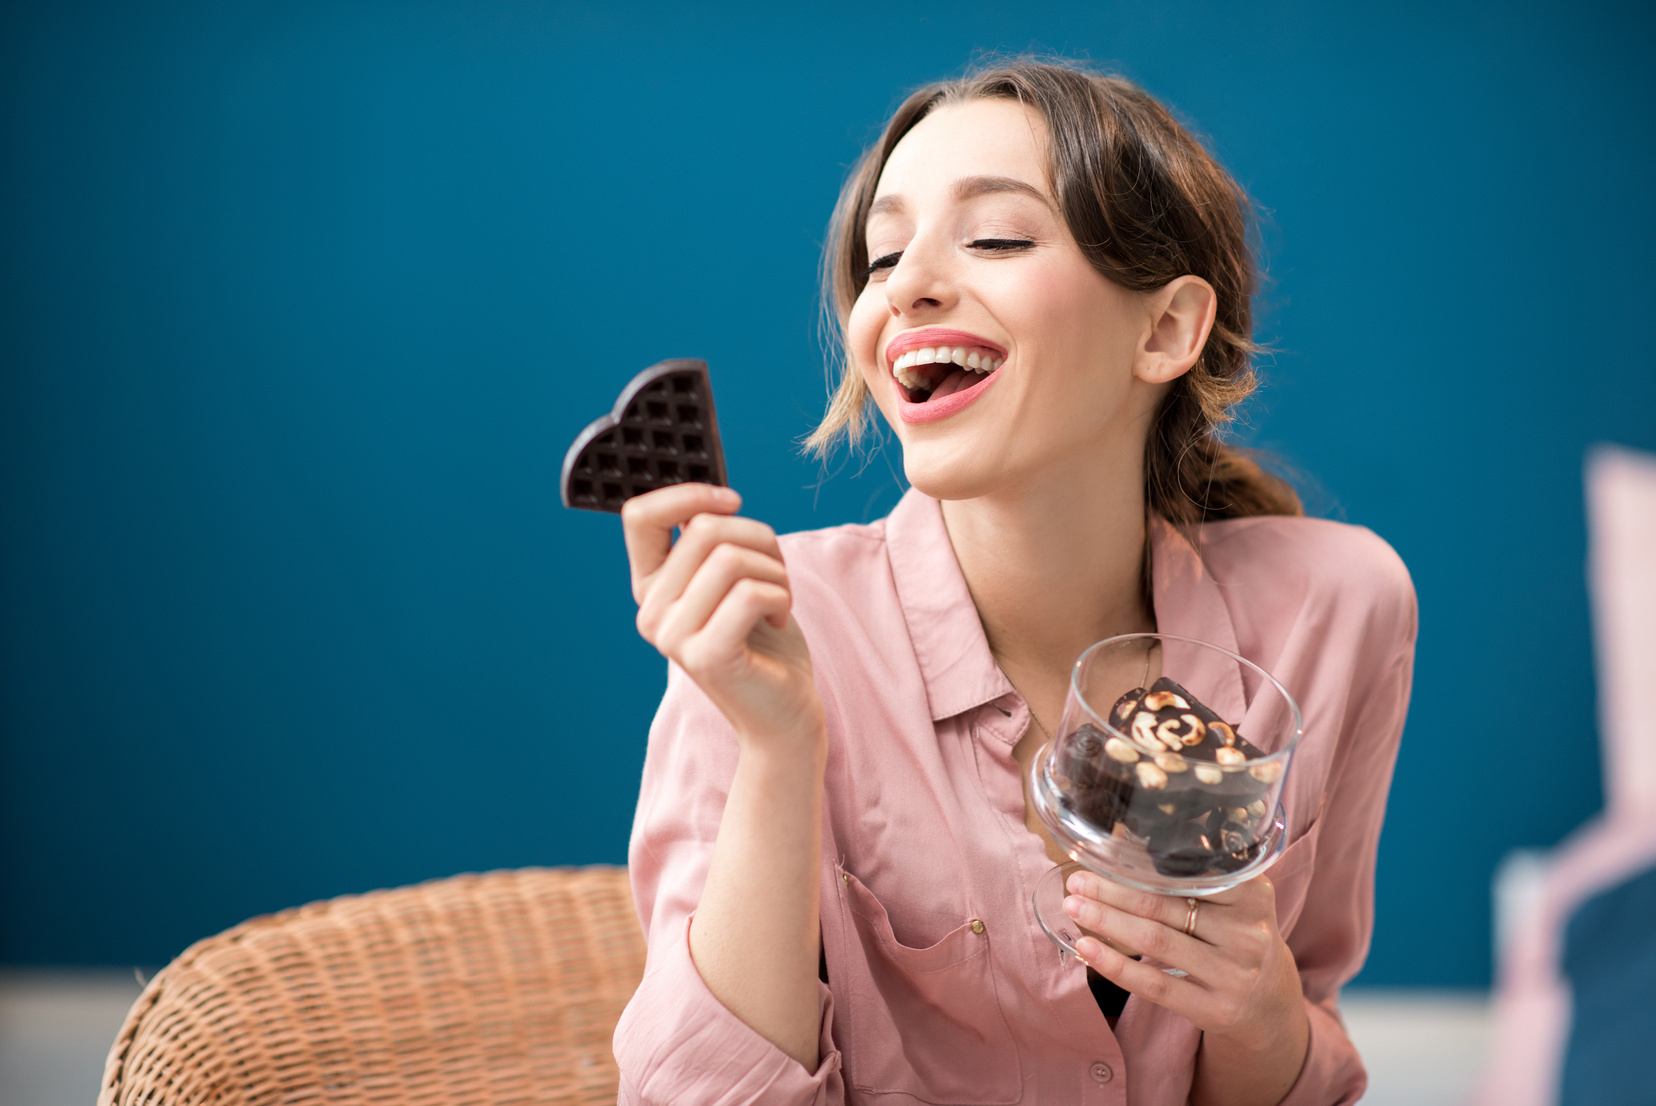 Woman Enjoying a Chocolate Indoors